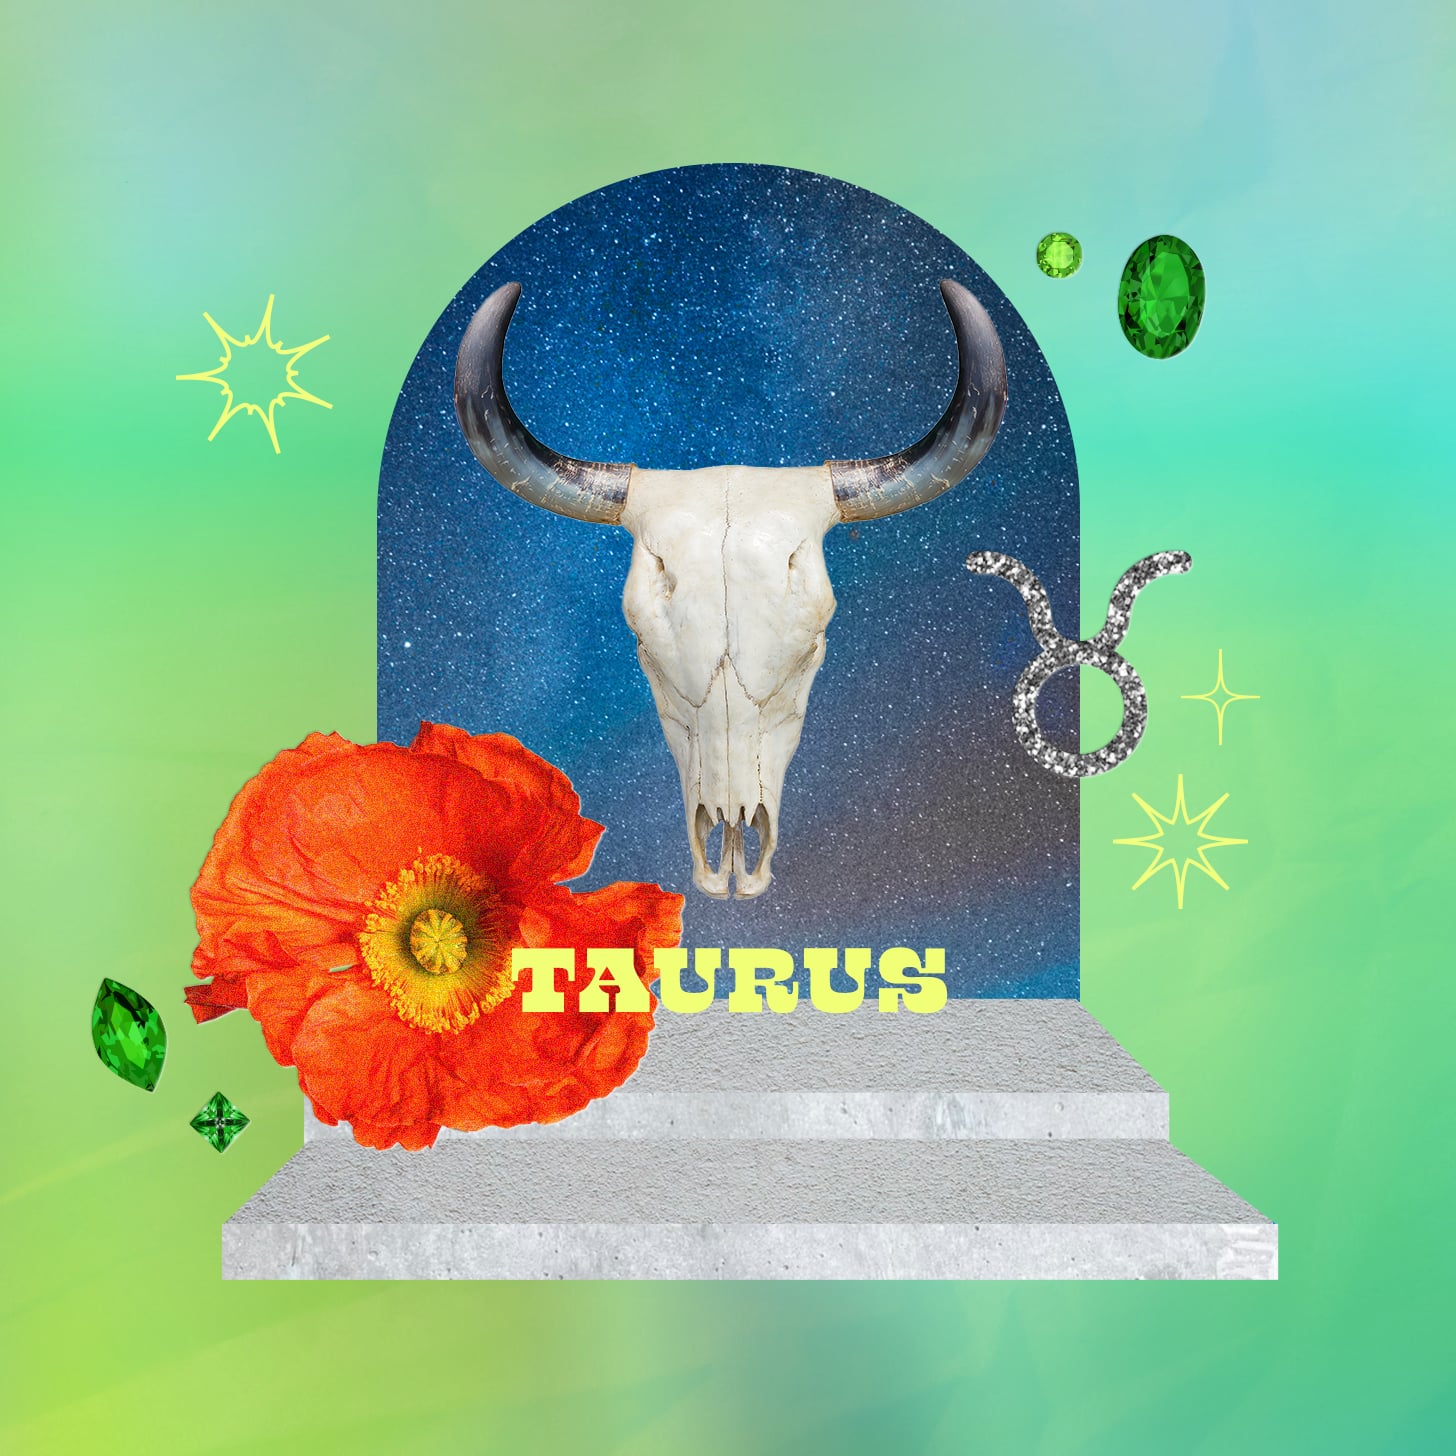 Taurus weekly horoscope for Nov. 27, 2022